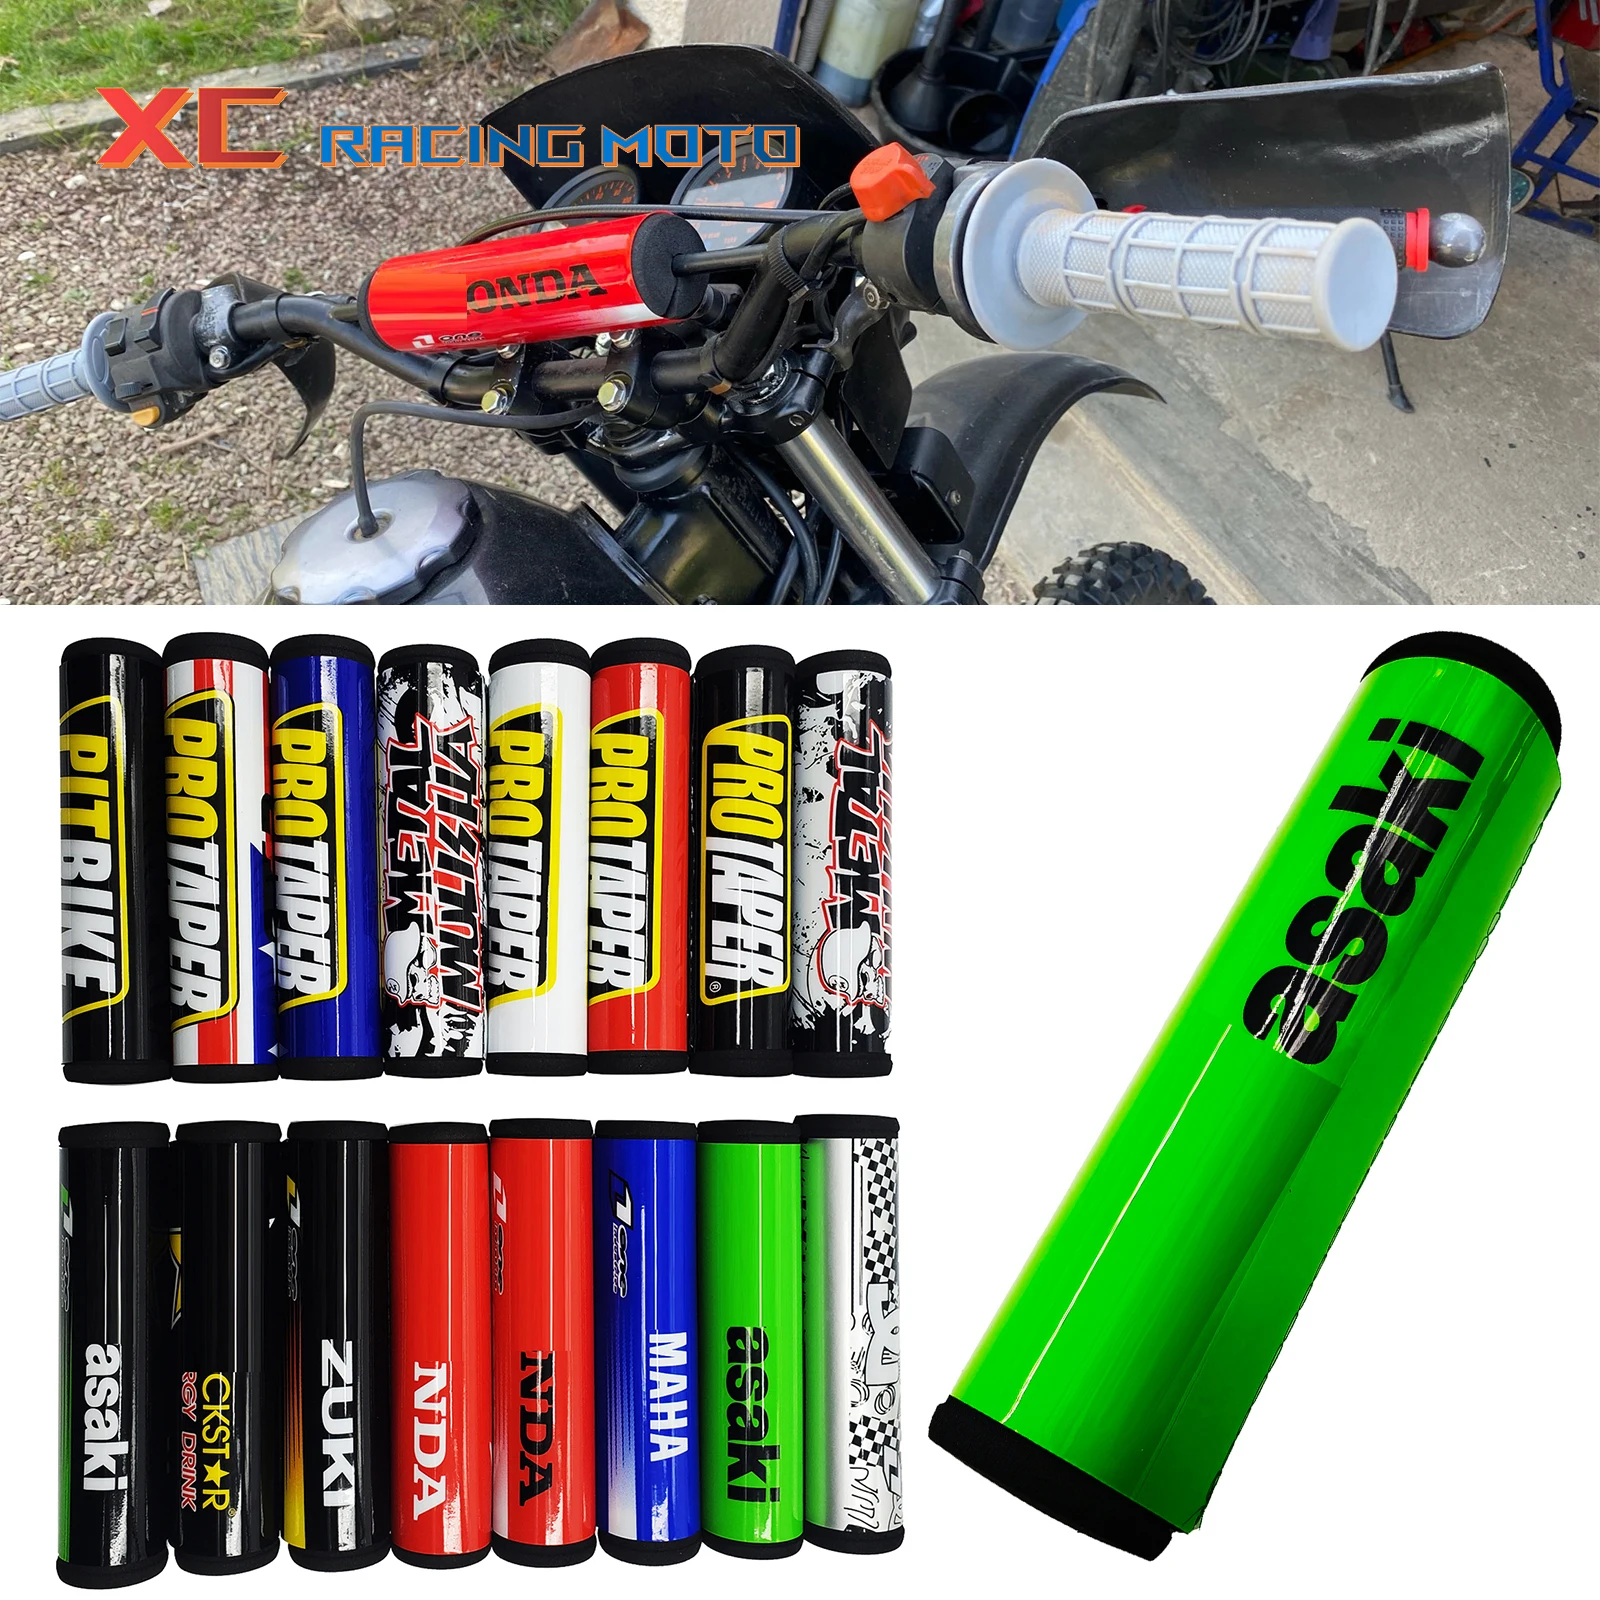 

200mm Pro Taper Round Handlebar Pad 7/8" For Honda Bse Kayo CRF RMZ YZF KLX EXC XC SX ATV Dirt Pit Bike Motorcycle Motocross